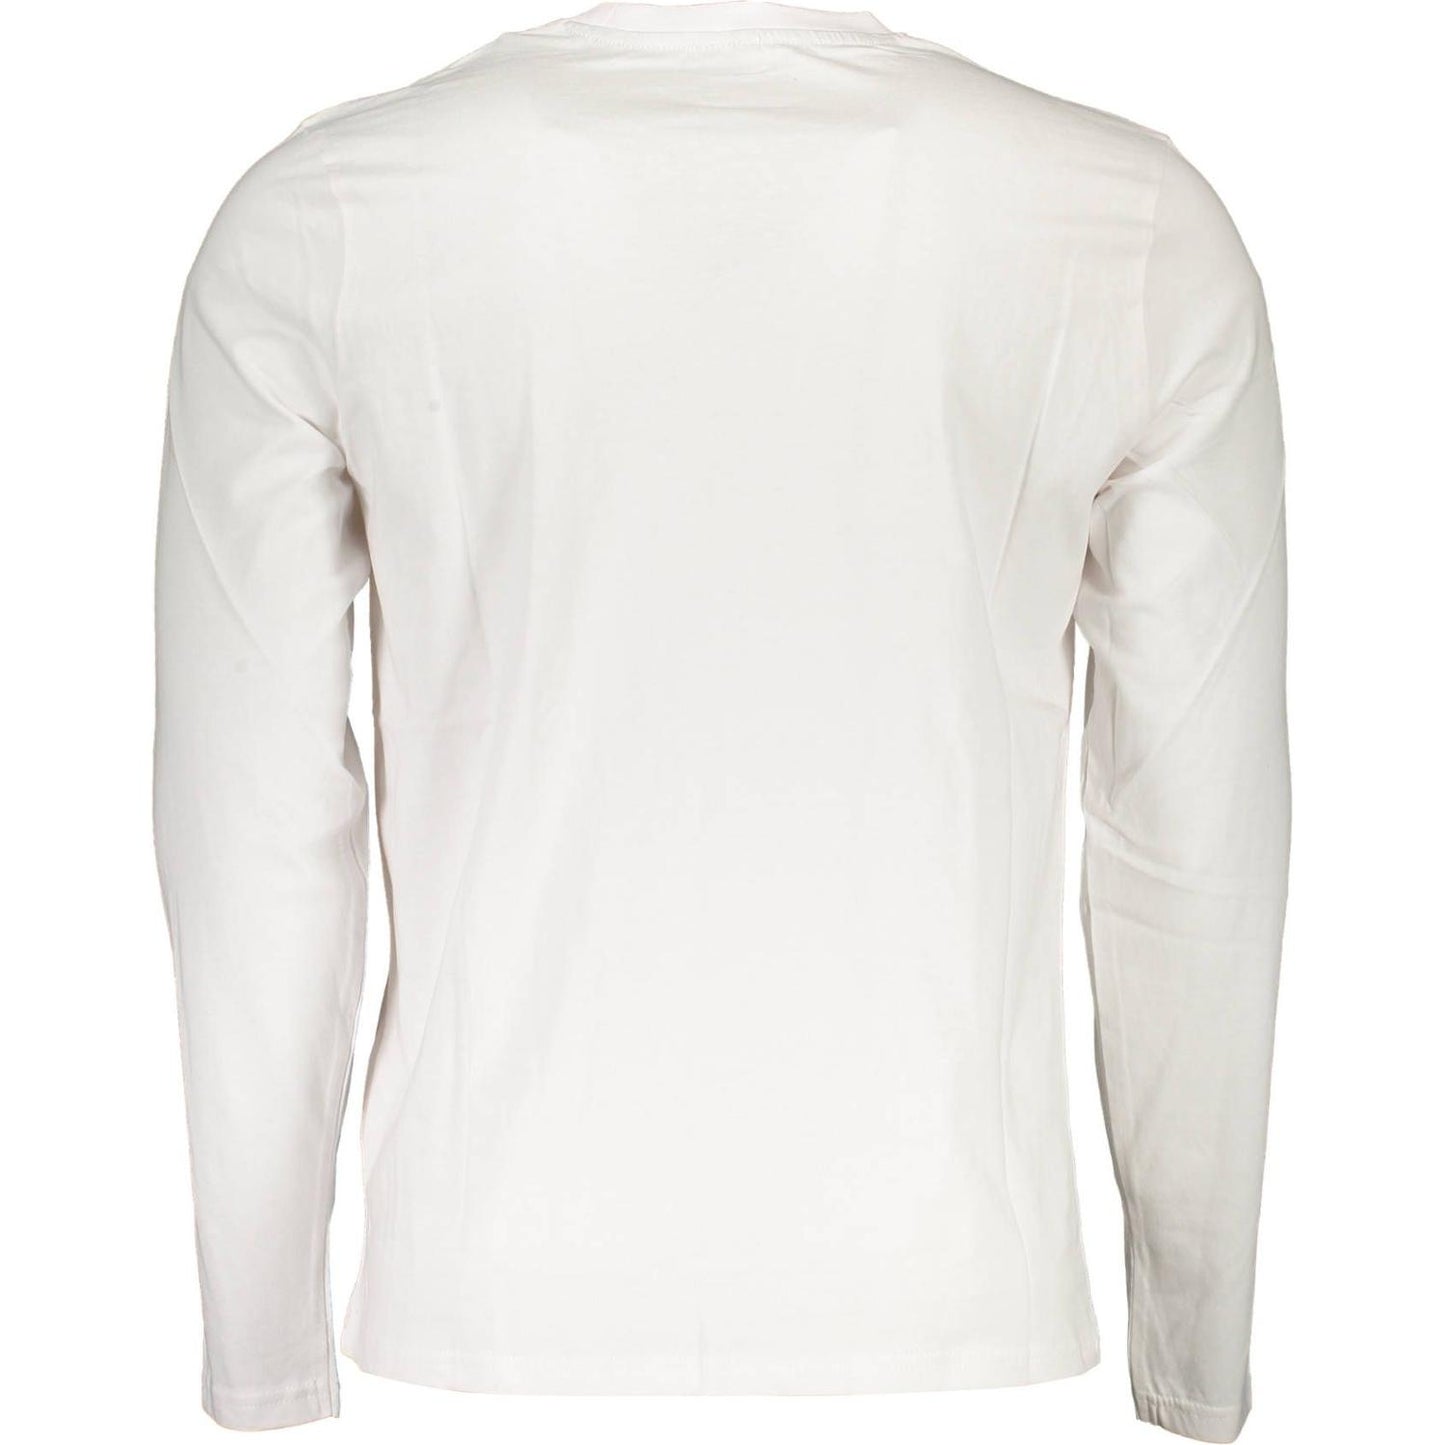 North Sails Sleek White Cotton T-Shirt with Stylish Print sleek-white-cotton-t-shirt-with-stylish-print